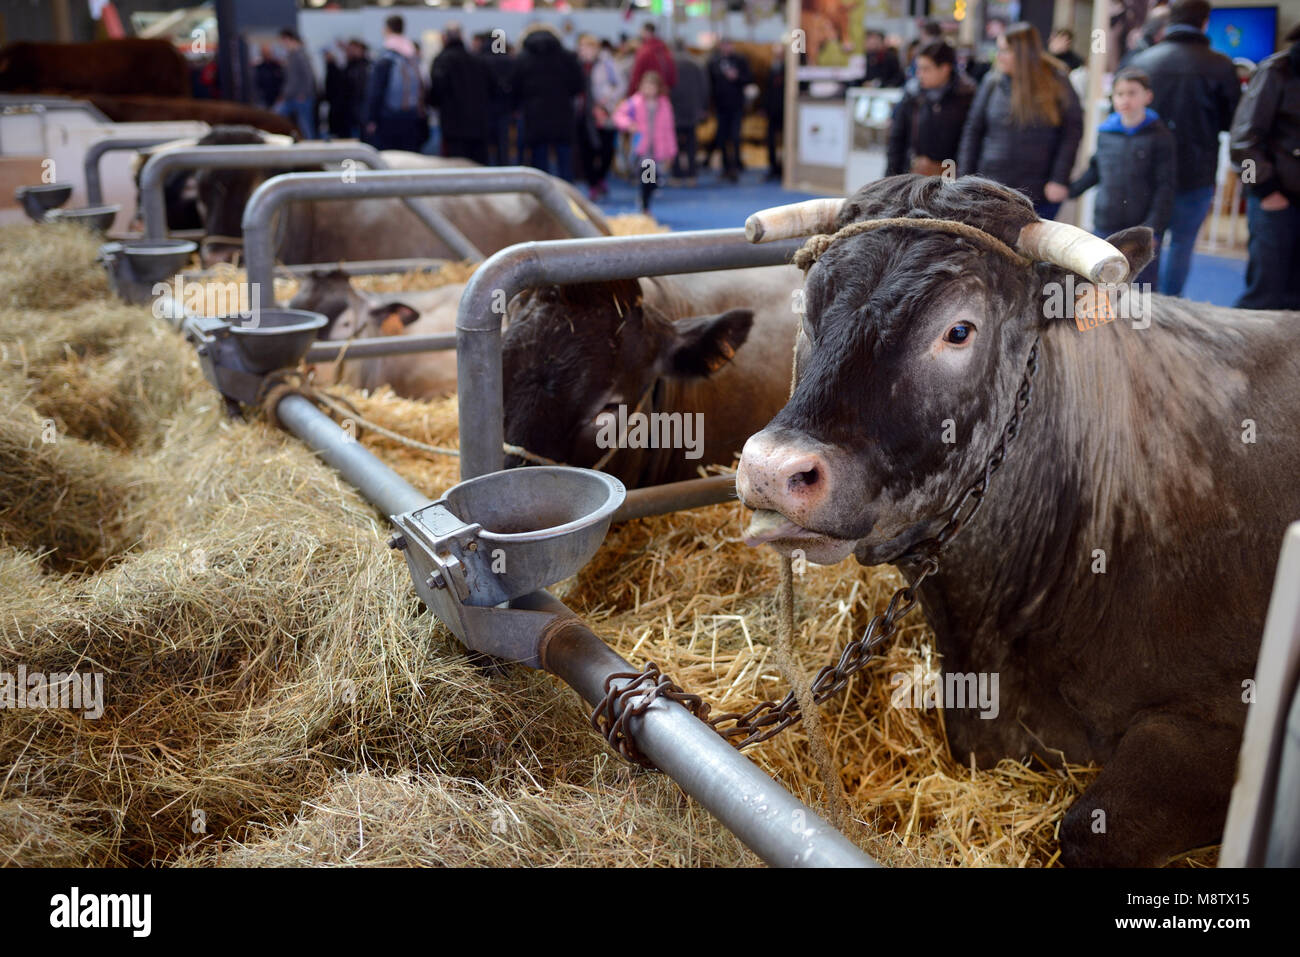 Bazadaise bovini da carne di bovini penne o stalle animali & i visitatori a Parigi Fiera agricola internazionale aka Salon International de l'Agriculture Foto Stock